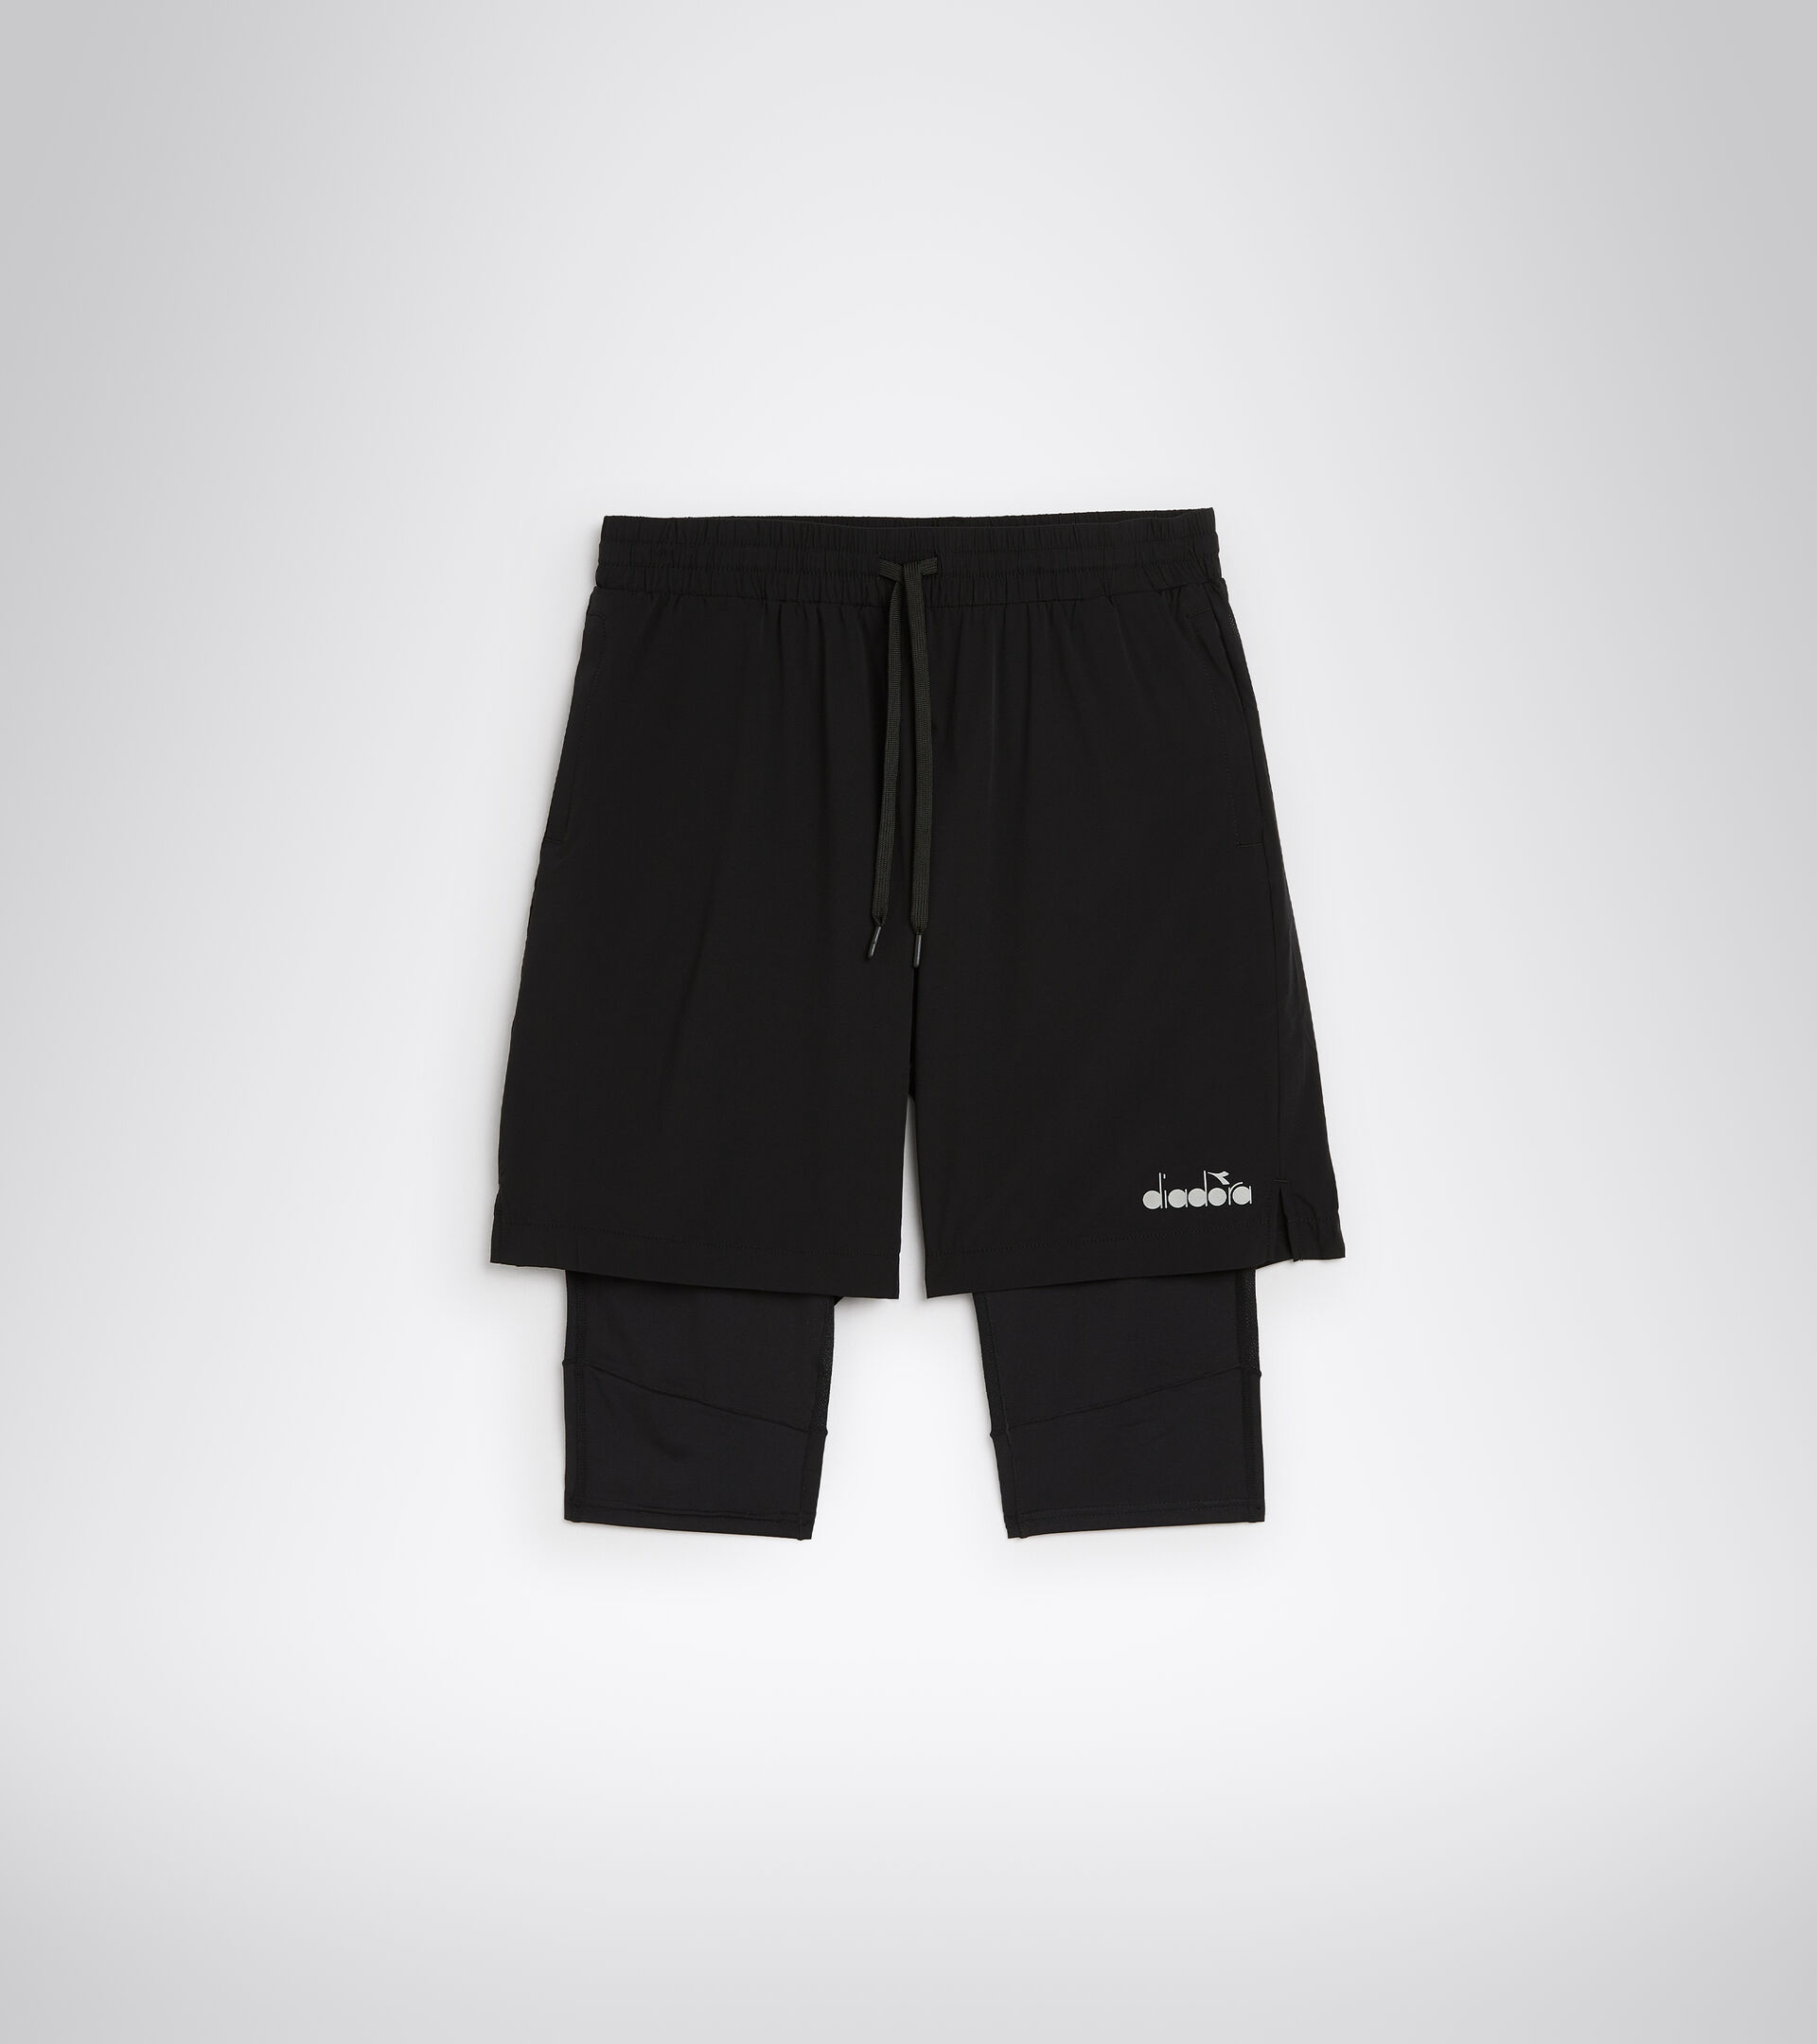 POWER SHORTS BE Diadora set - Store - Online ONE Men GR shorts with detachable Leggings running